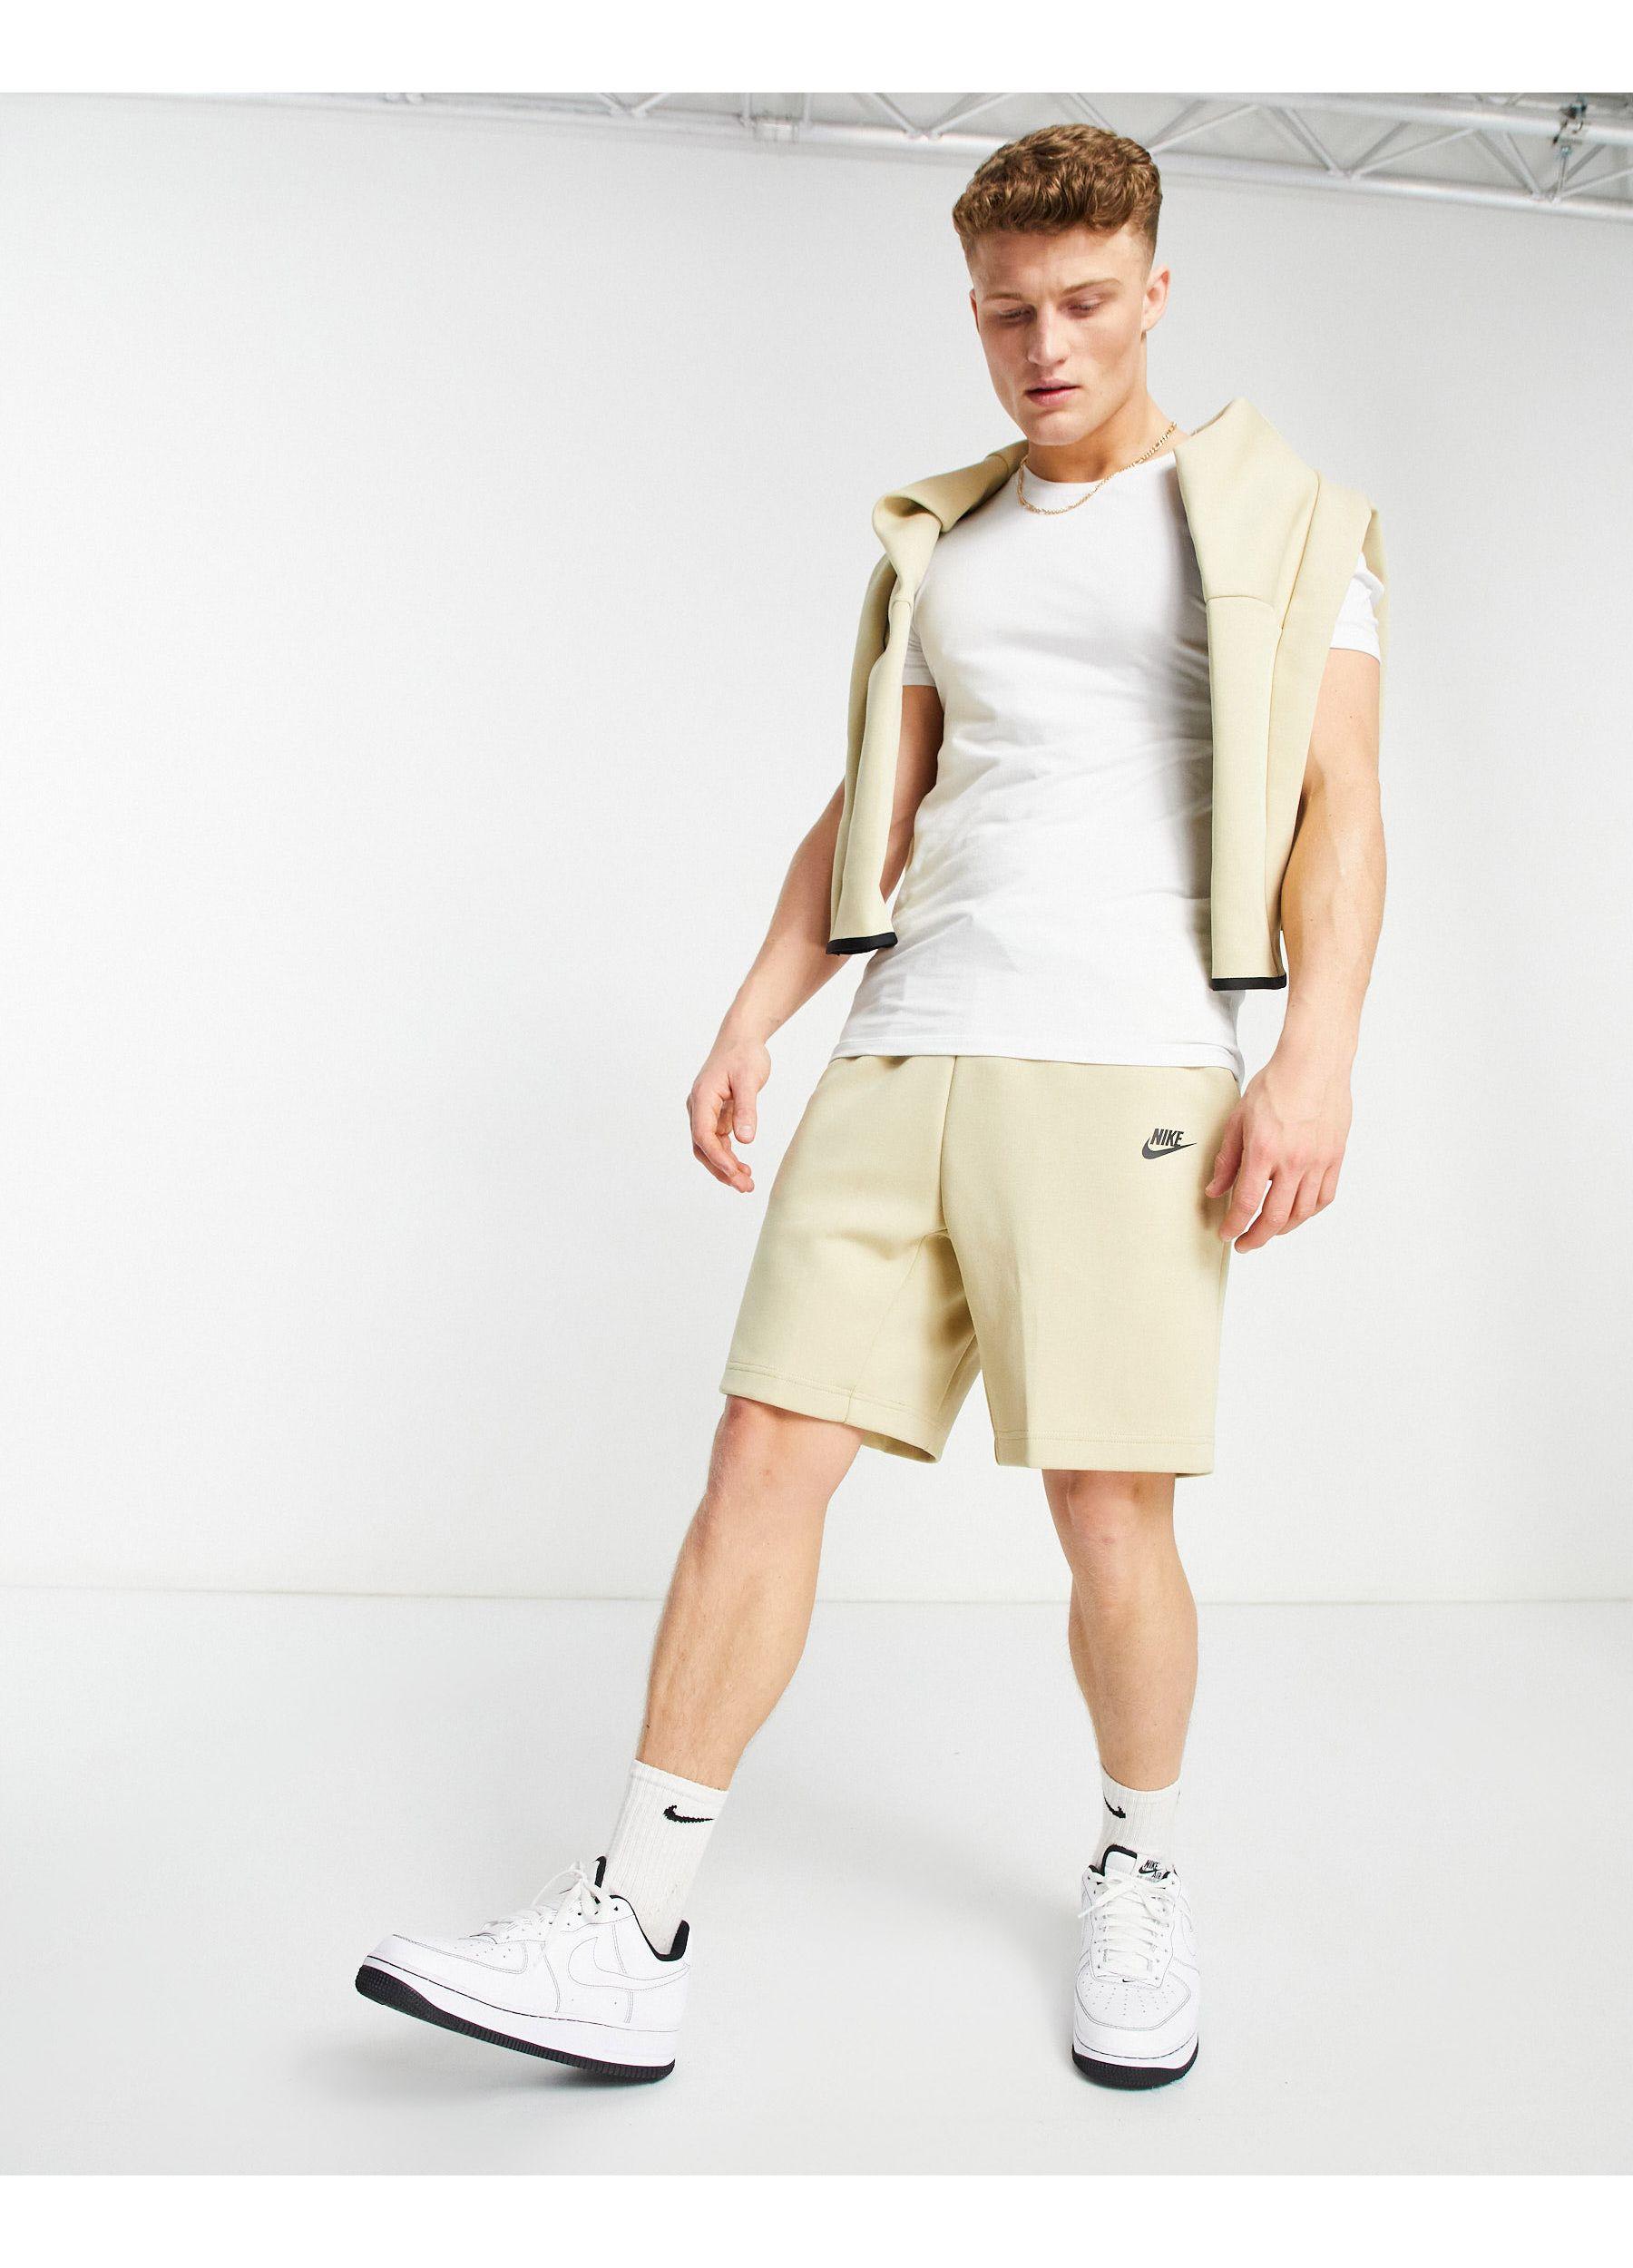 Stamboom Antecedent Pelgrim Nike Tech Fleece Shorts in Natural for Men | Lyst